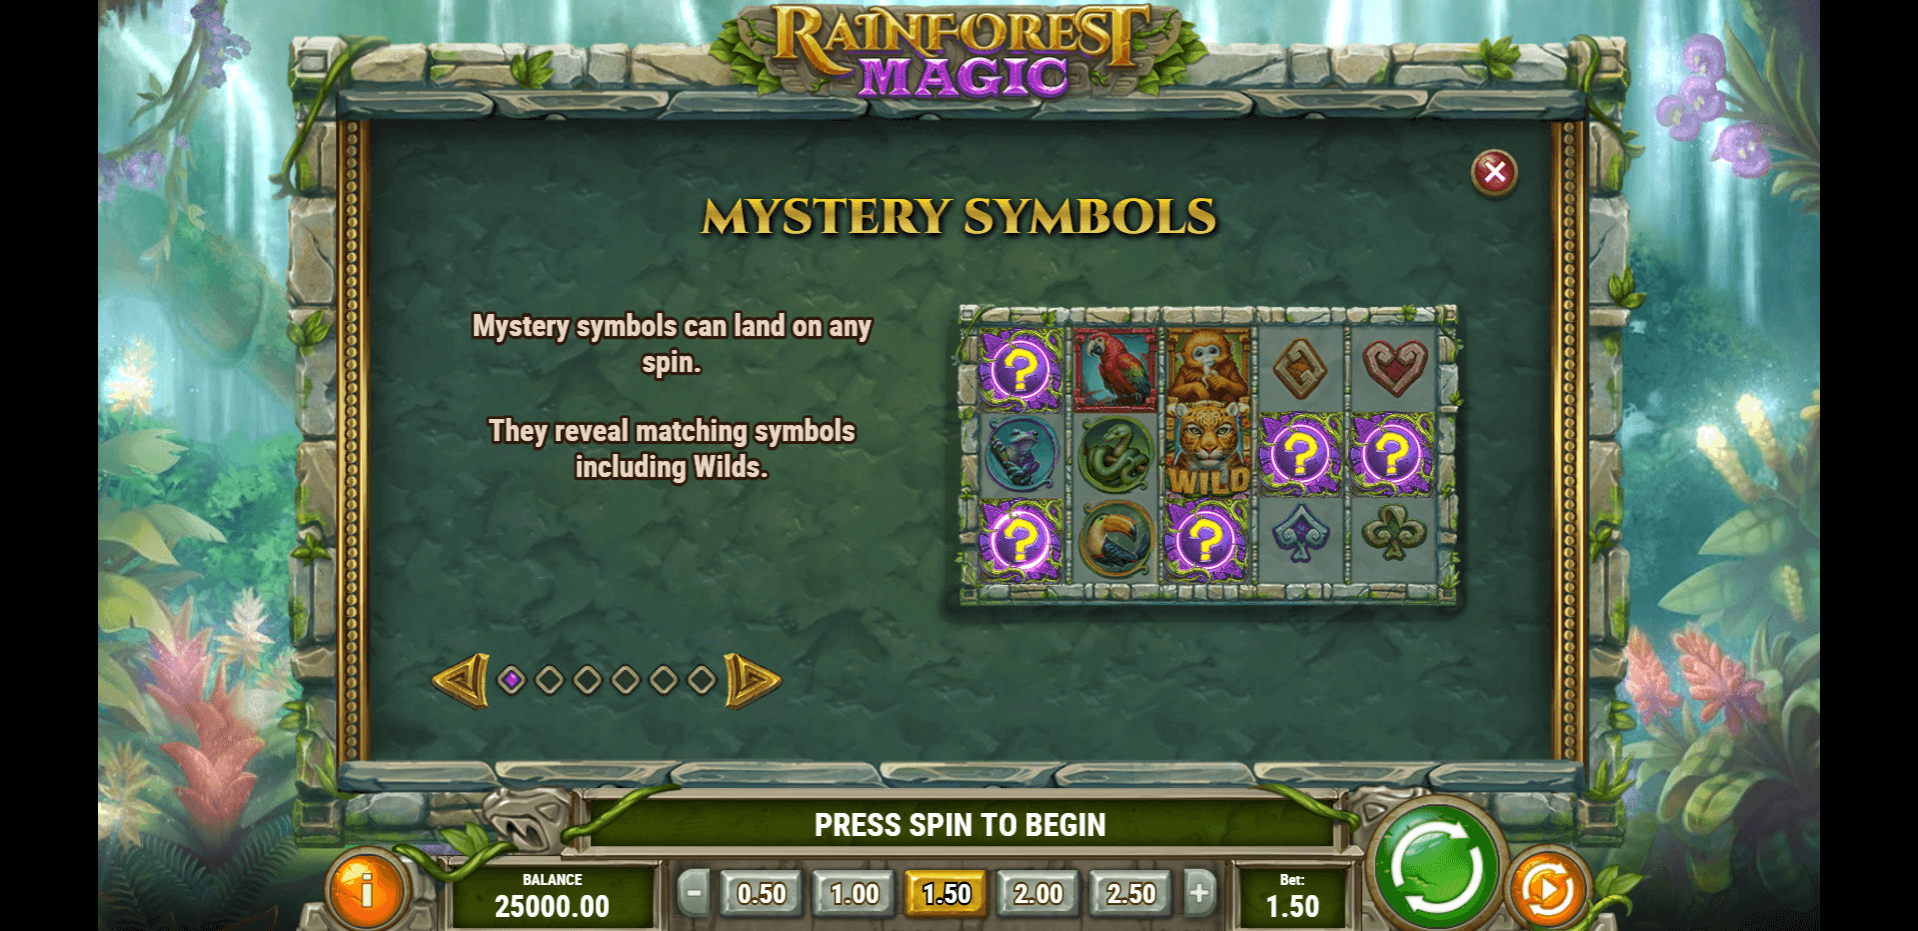 rainforest magic slot machine detail image 0